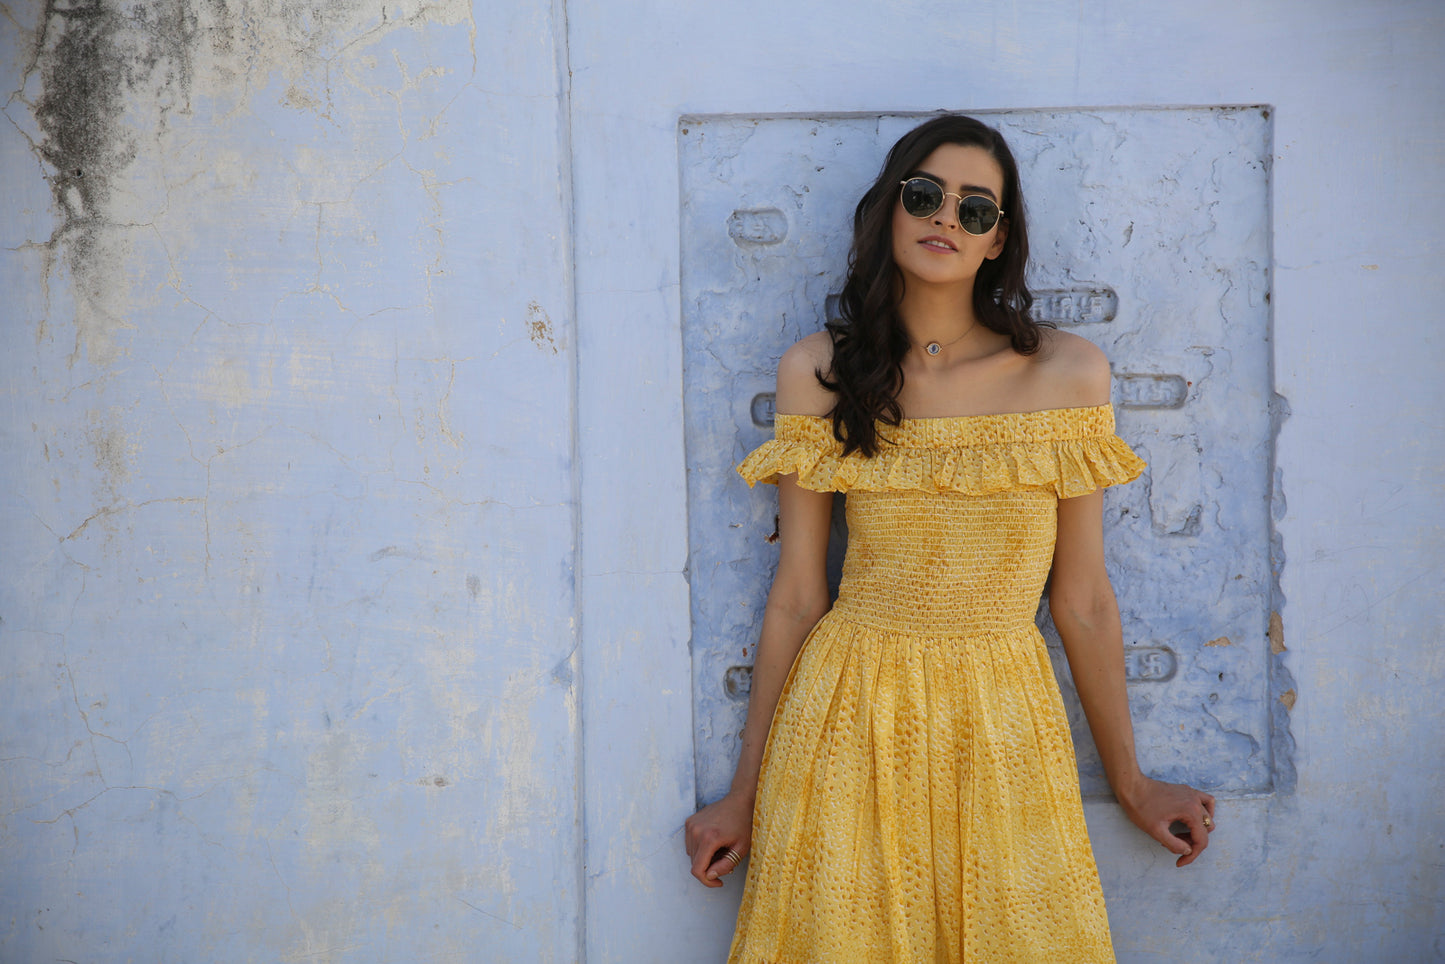 The Yellow Frida Dress